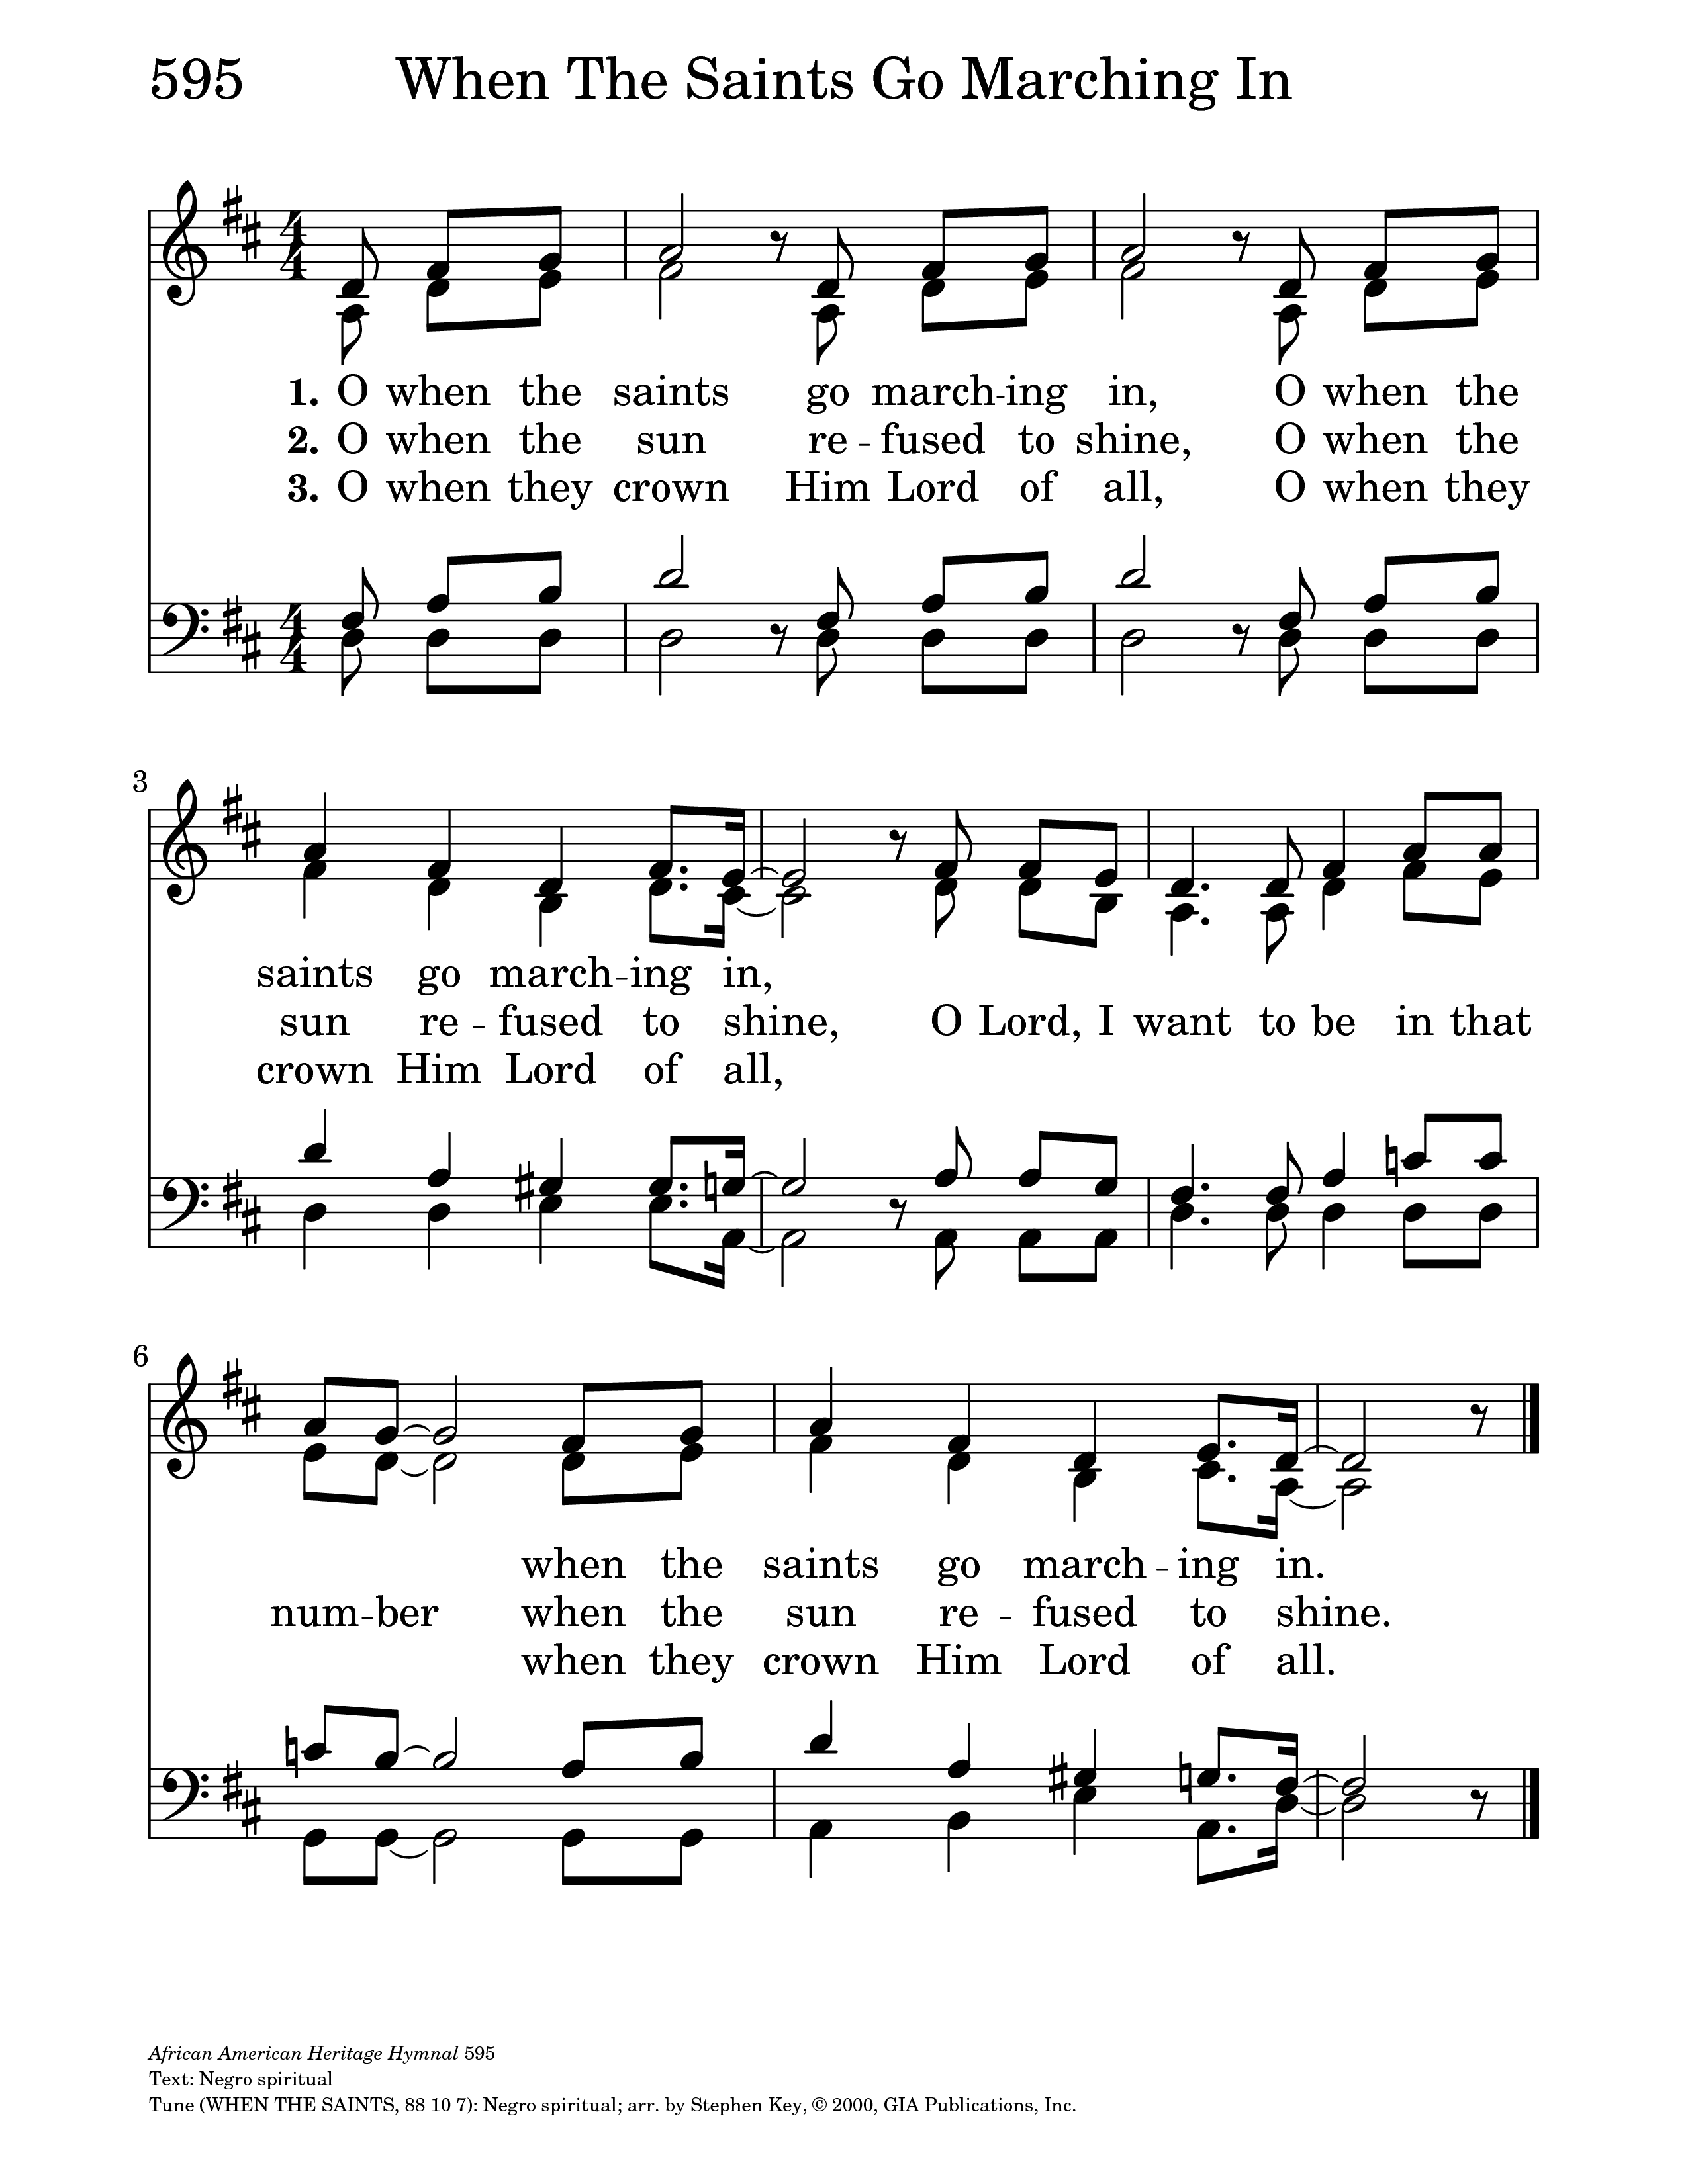 When The Saints Go Marching In Hymn Lyrics